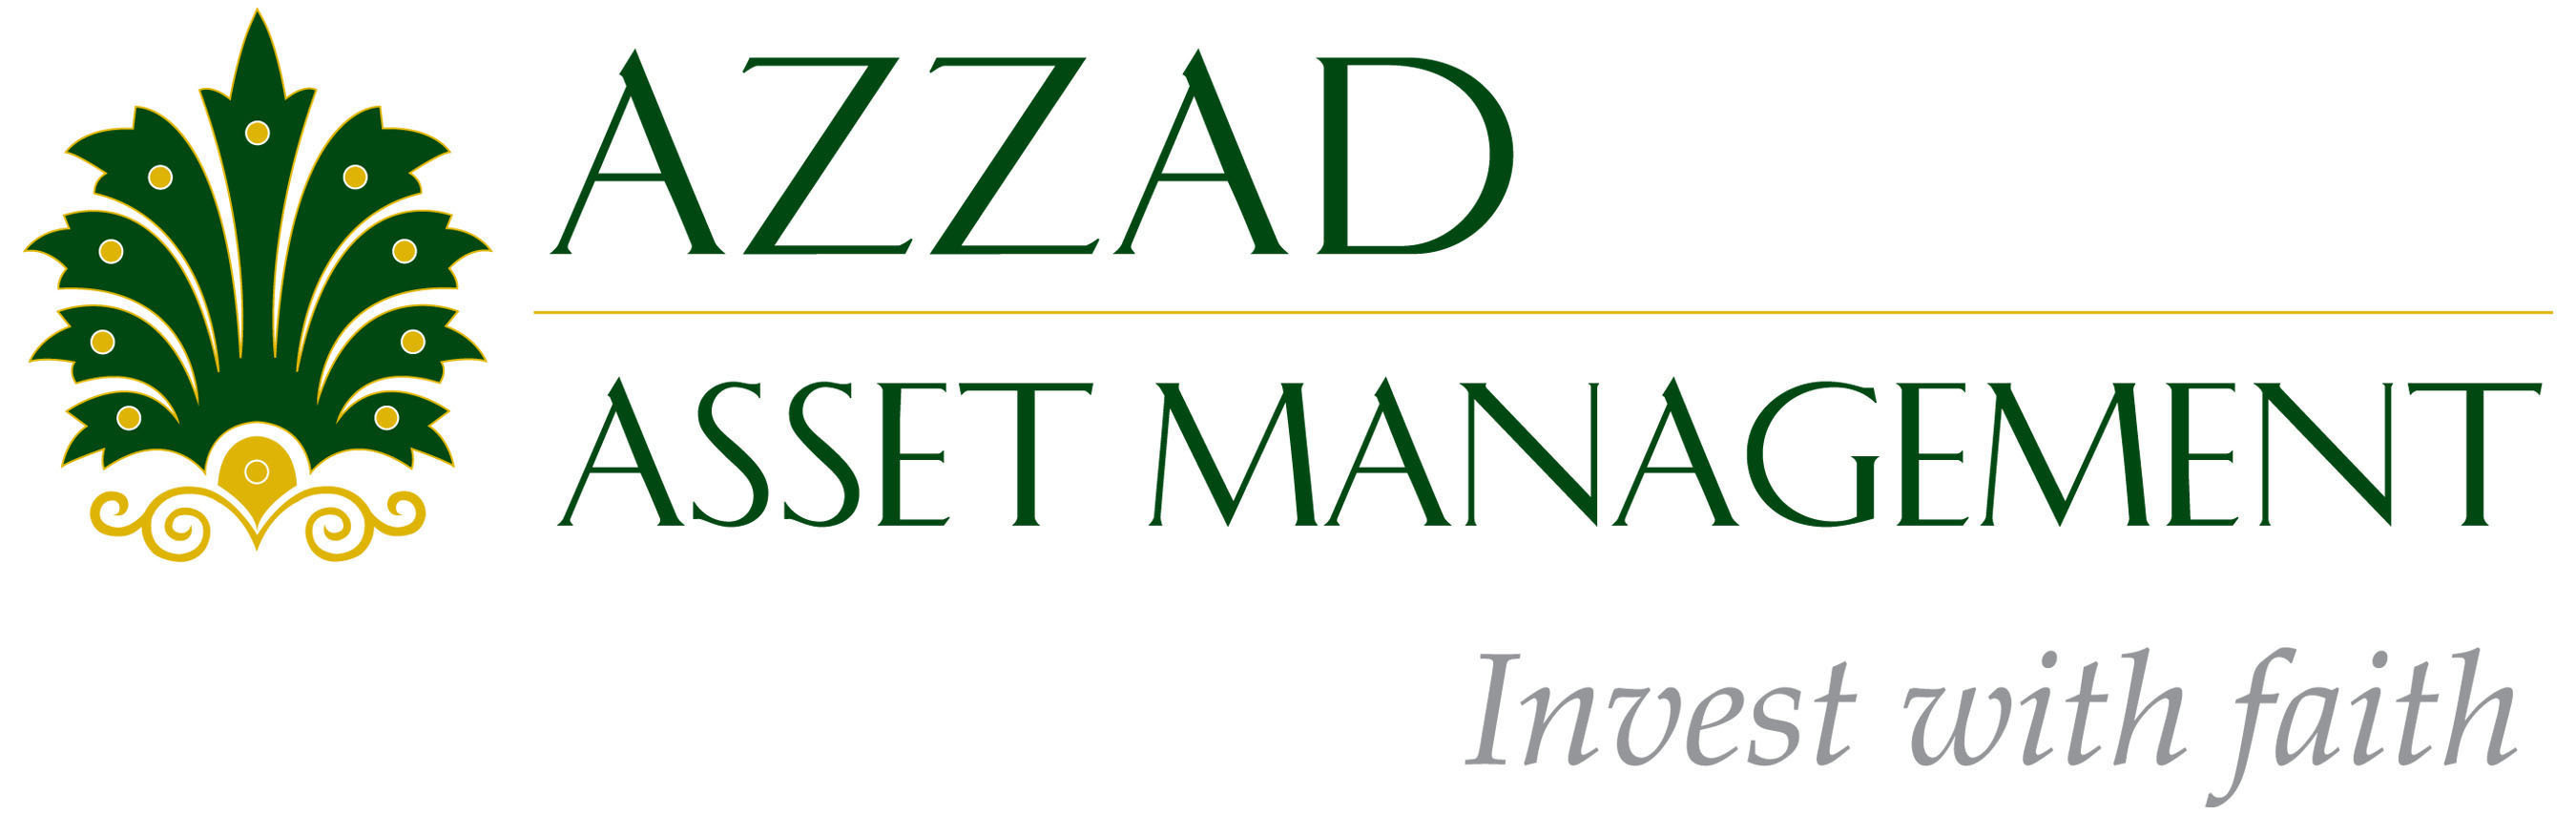 Azzad Asset Management Logo.